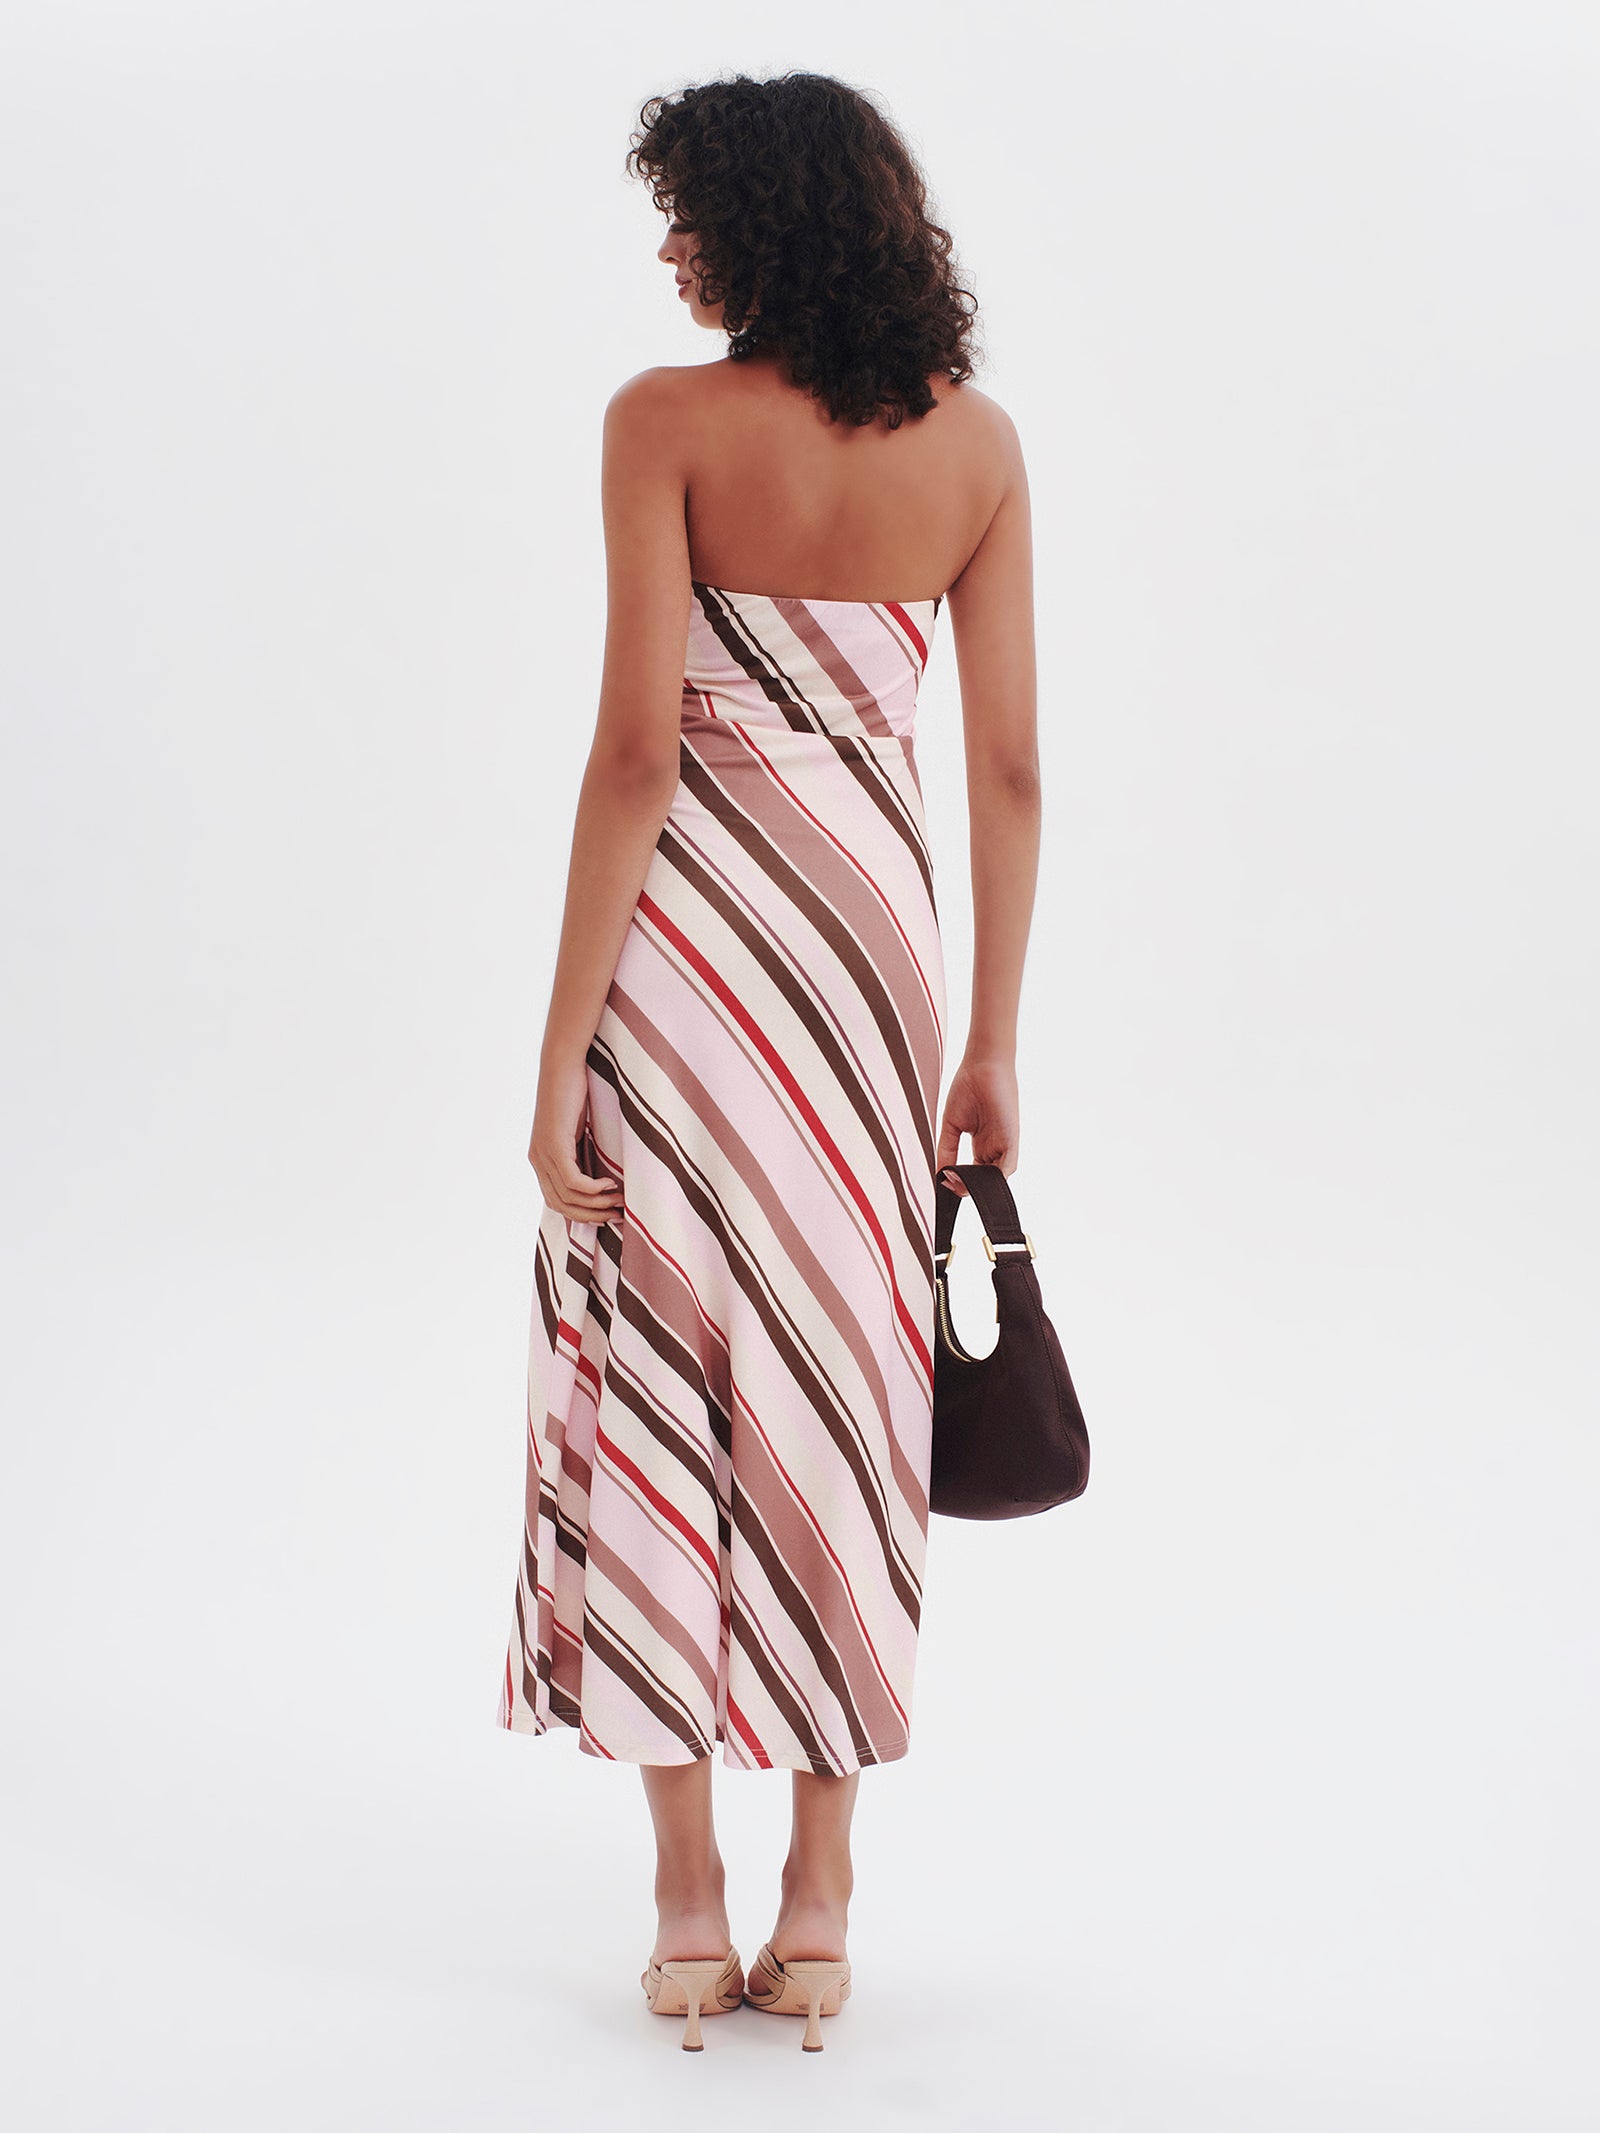 Deja Vu Strapless Dress in Candy Stripe